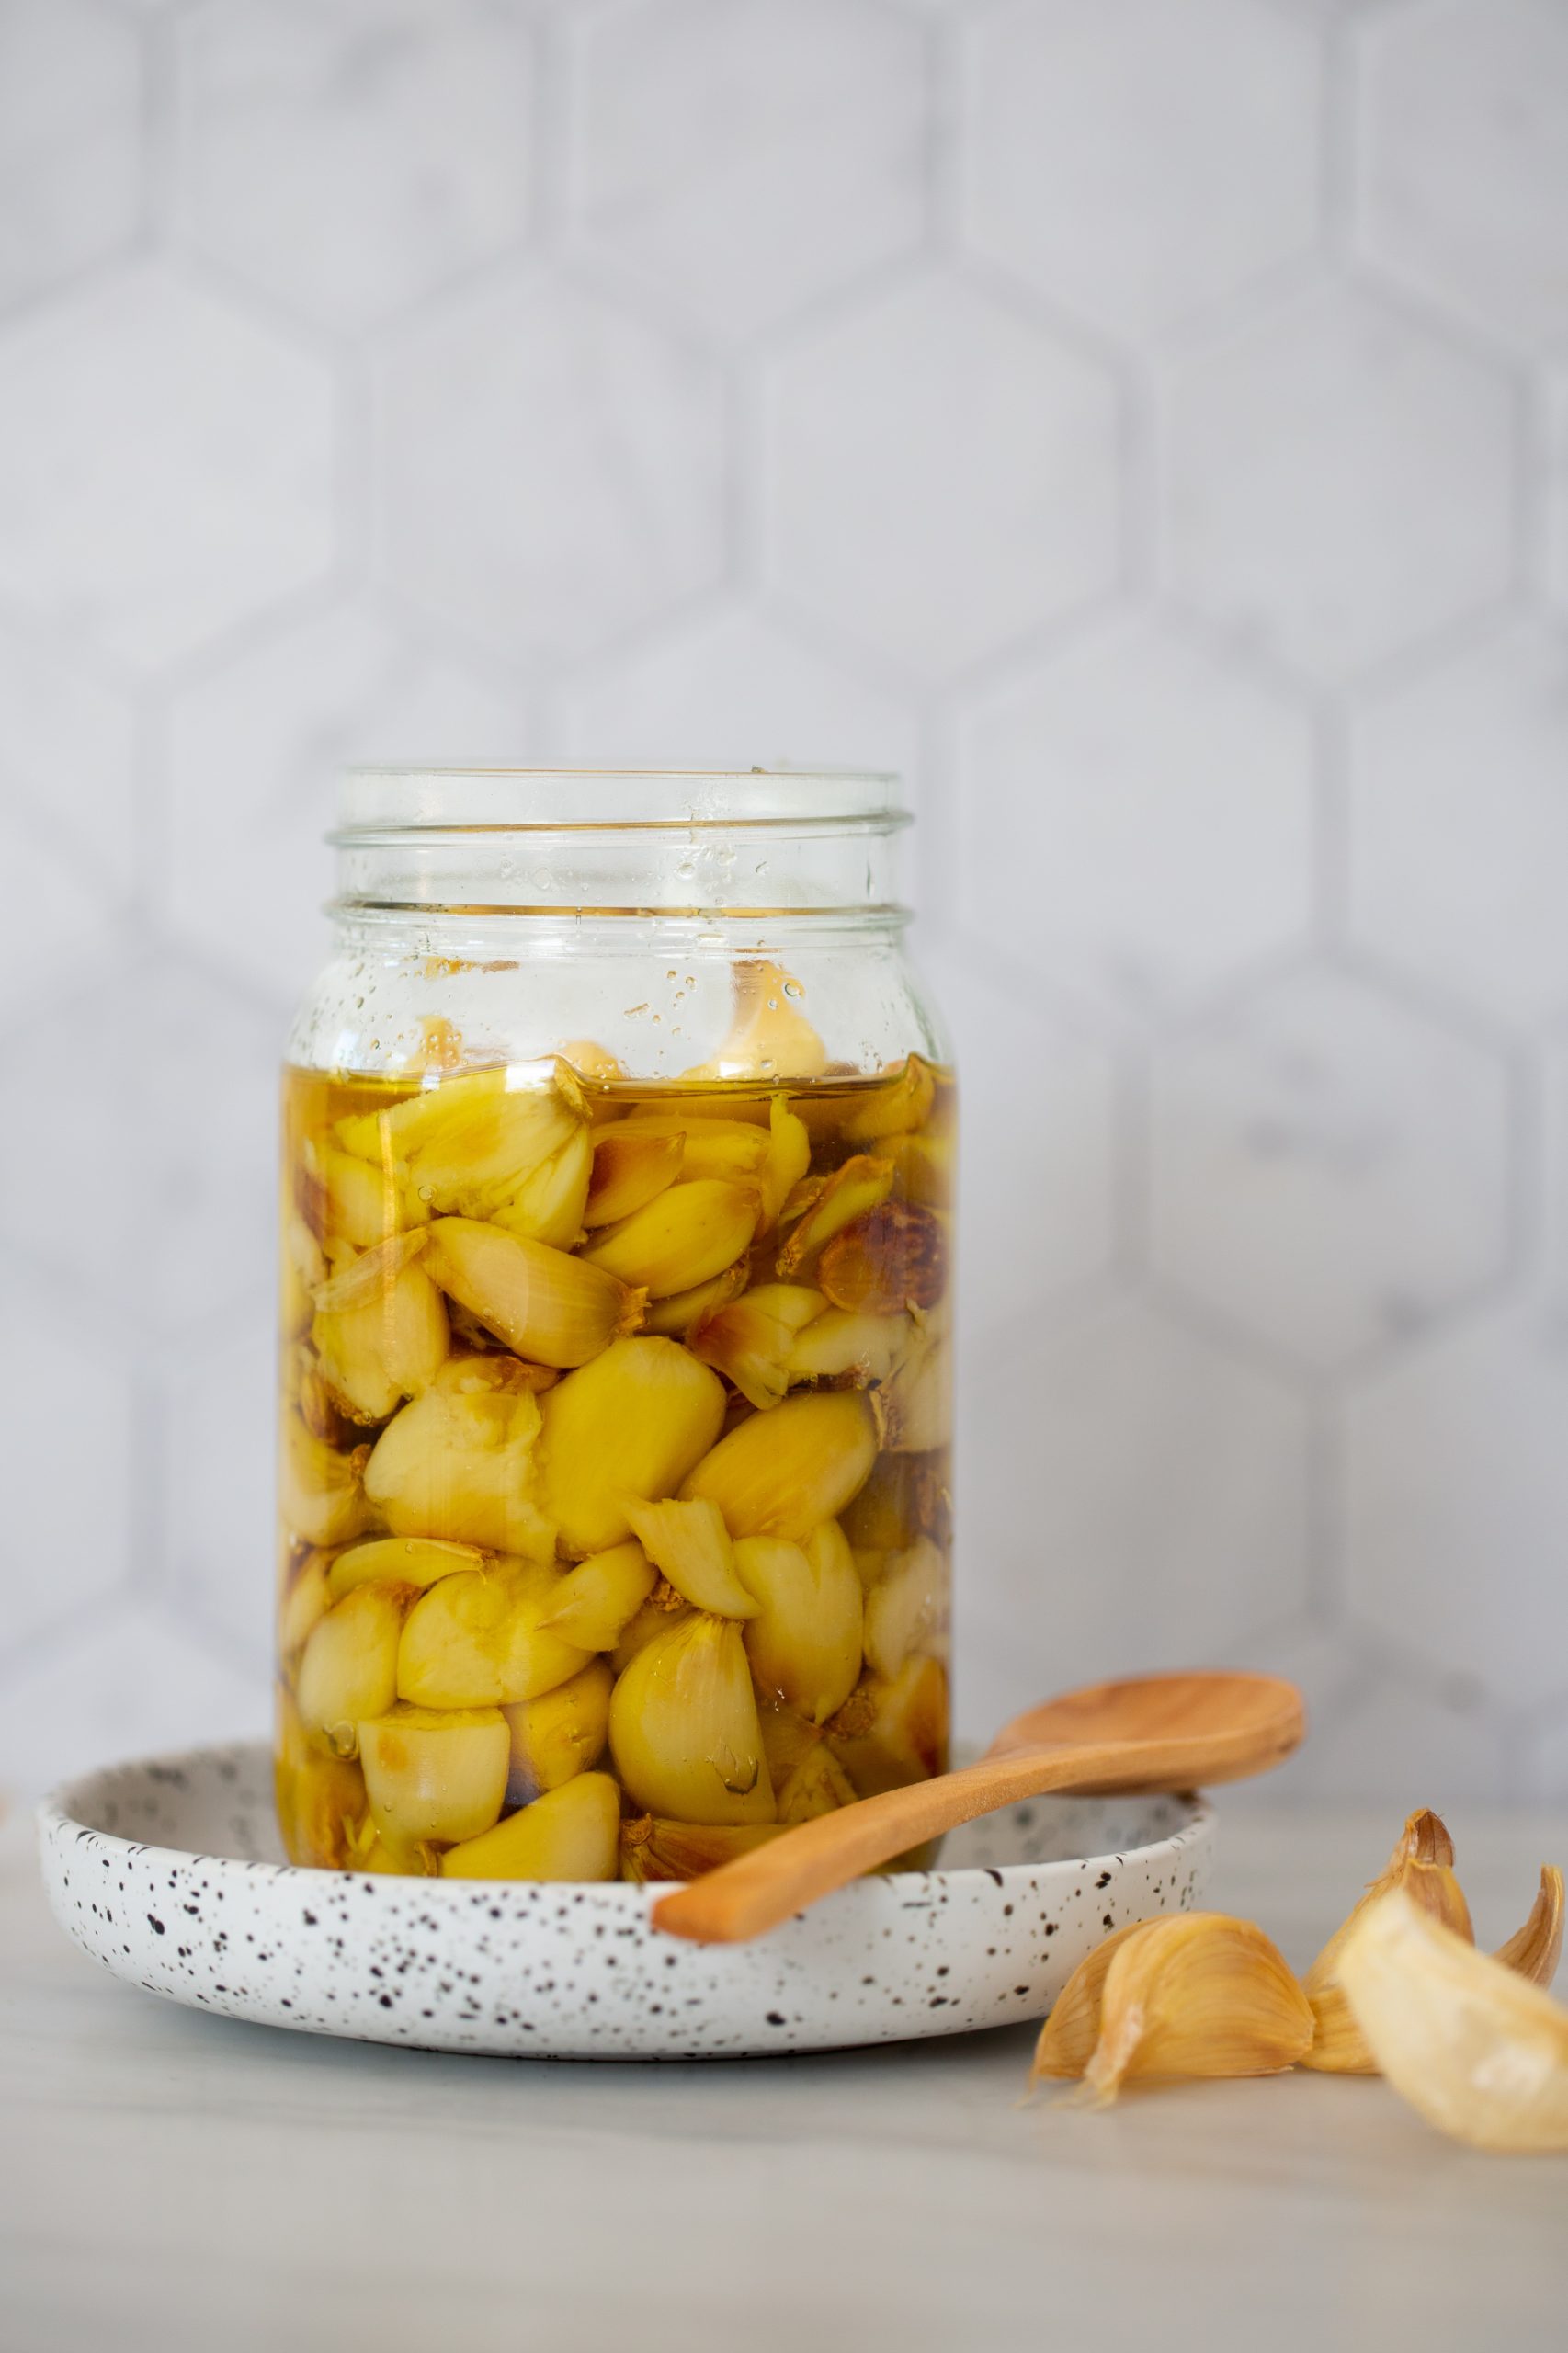 garlic cloves in jar with oil